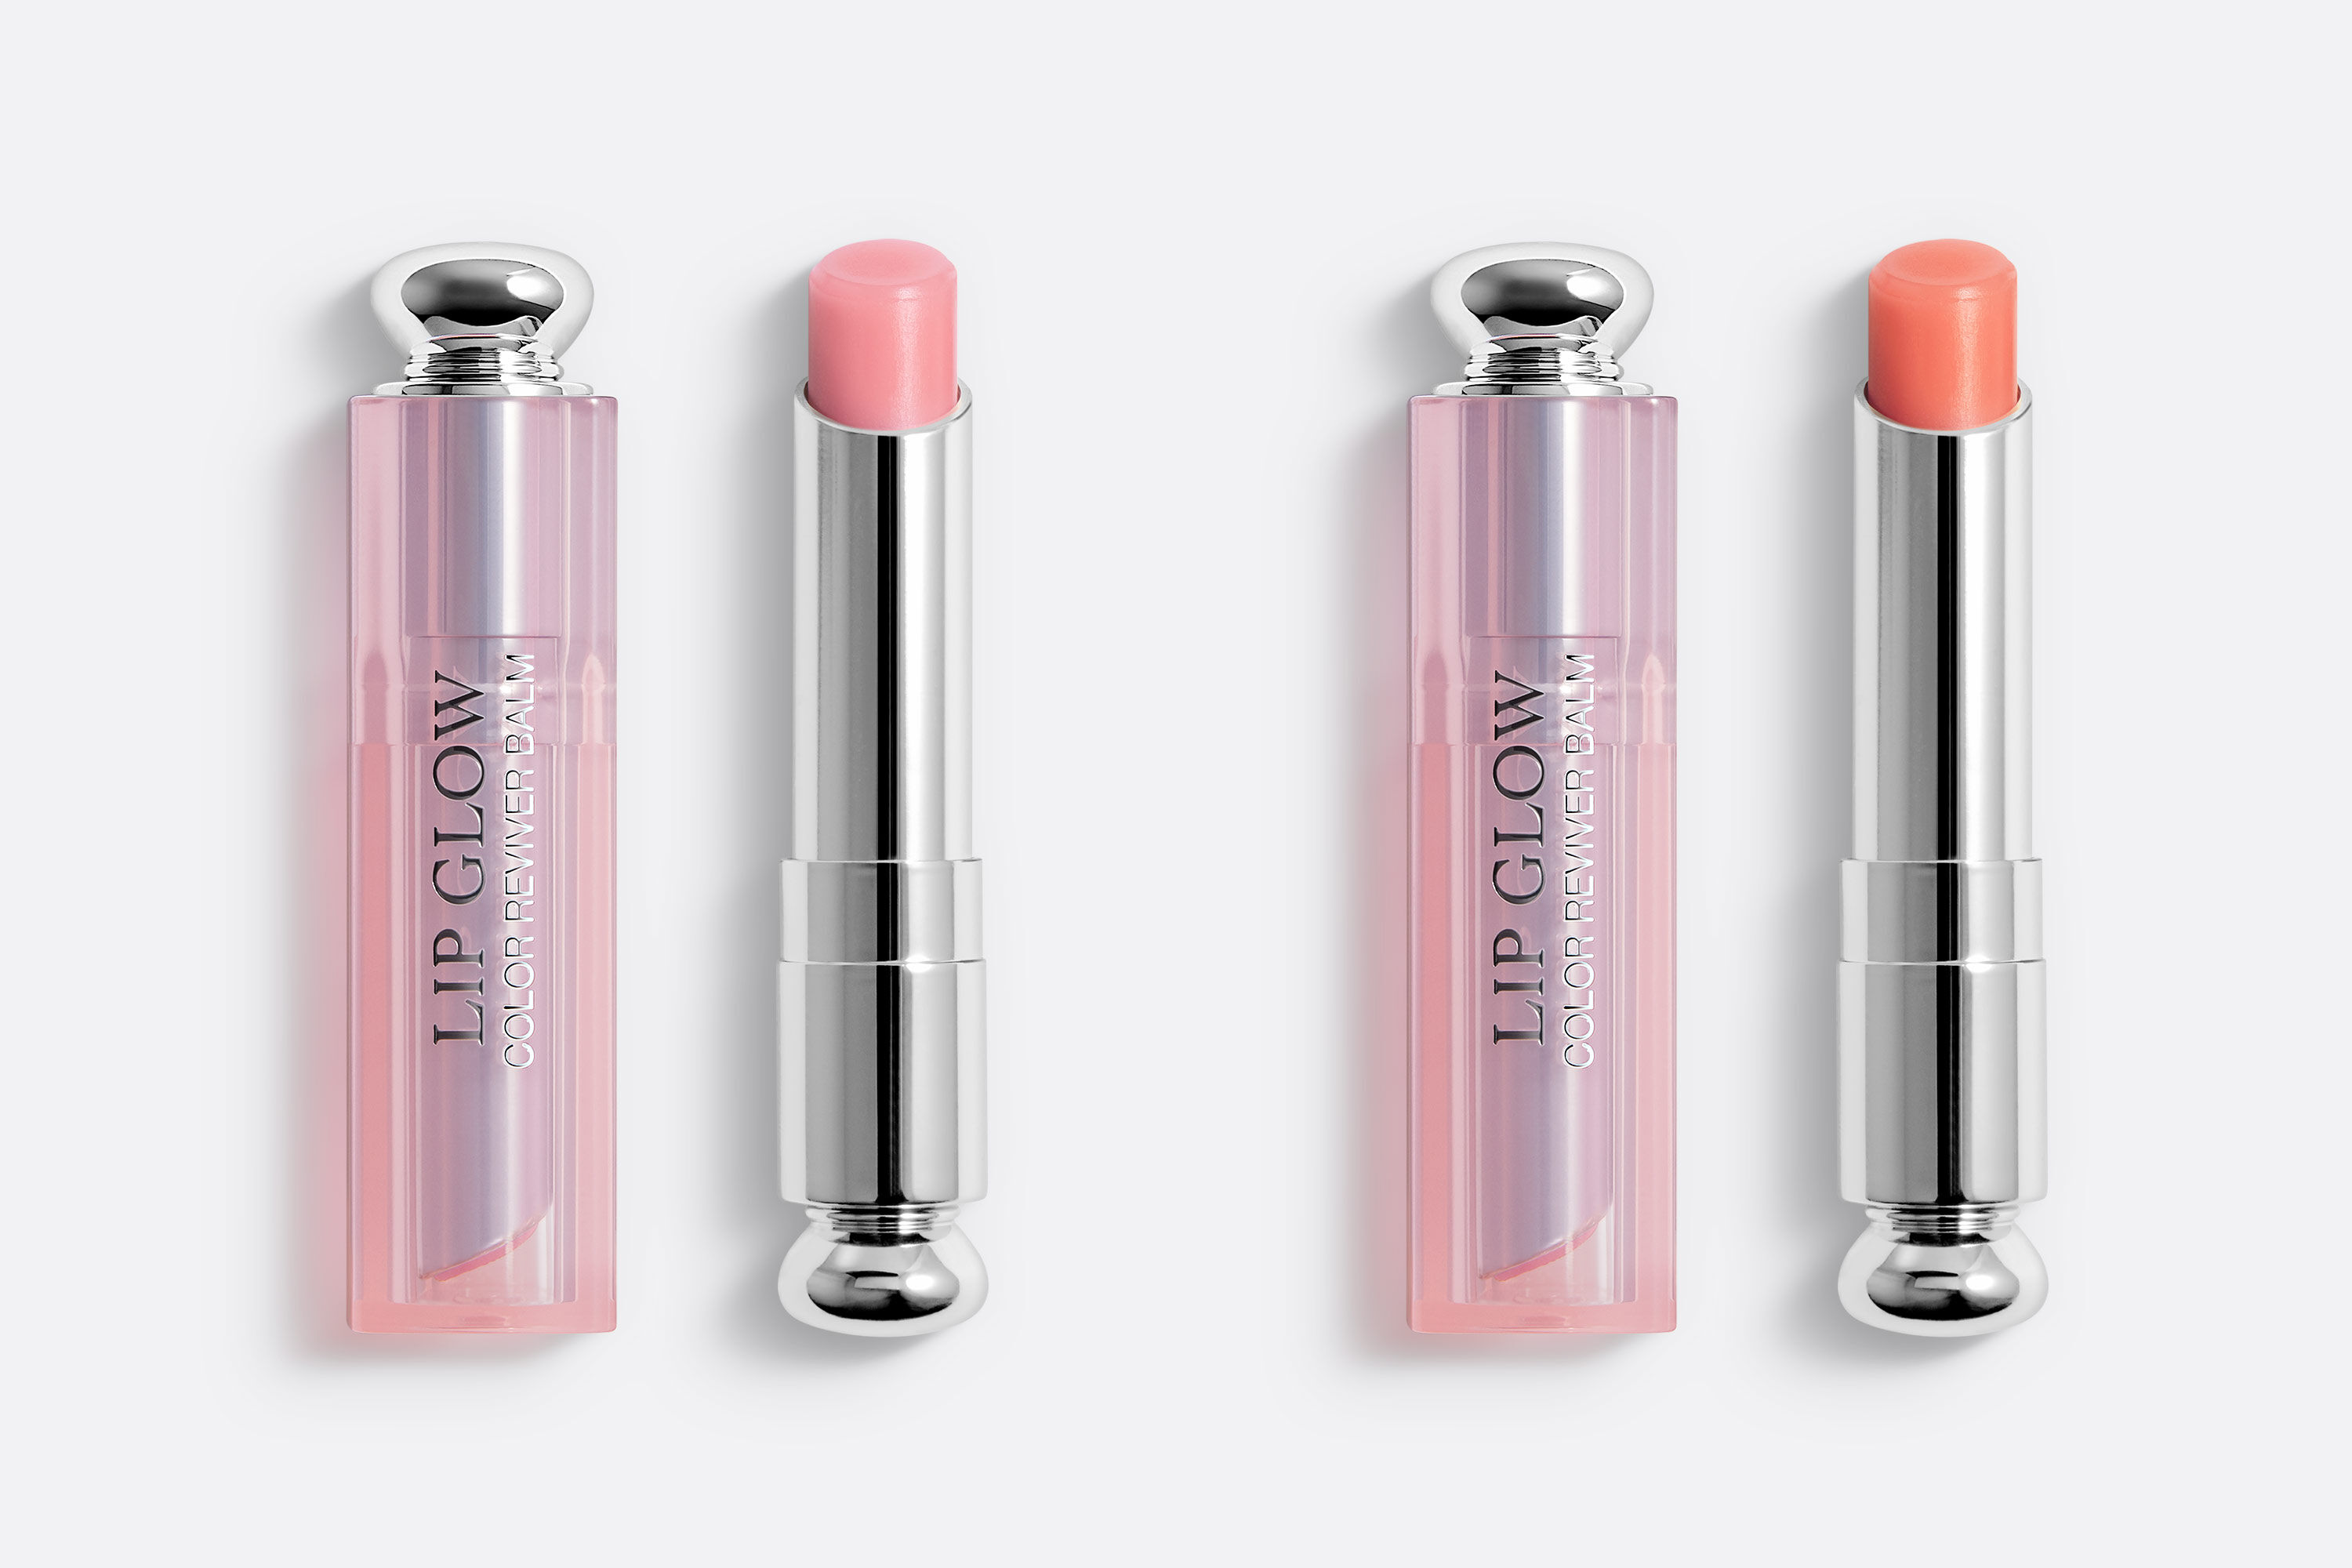 Christian Dior  Dior Addict Lip Glow  Colour Reviving Lip Balm  32g011oz  Son  Free Worldwide Shipping  Strawberrynet VN